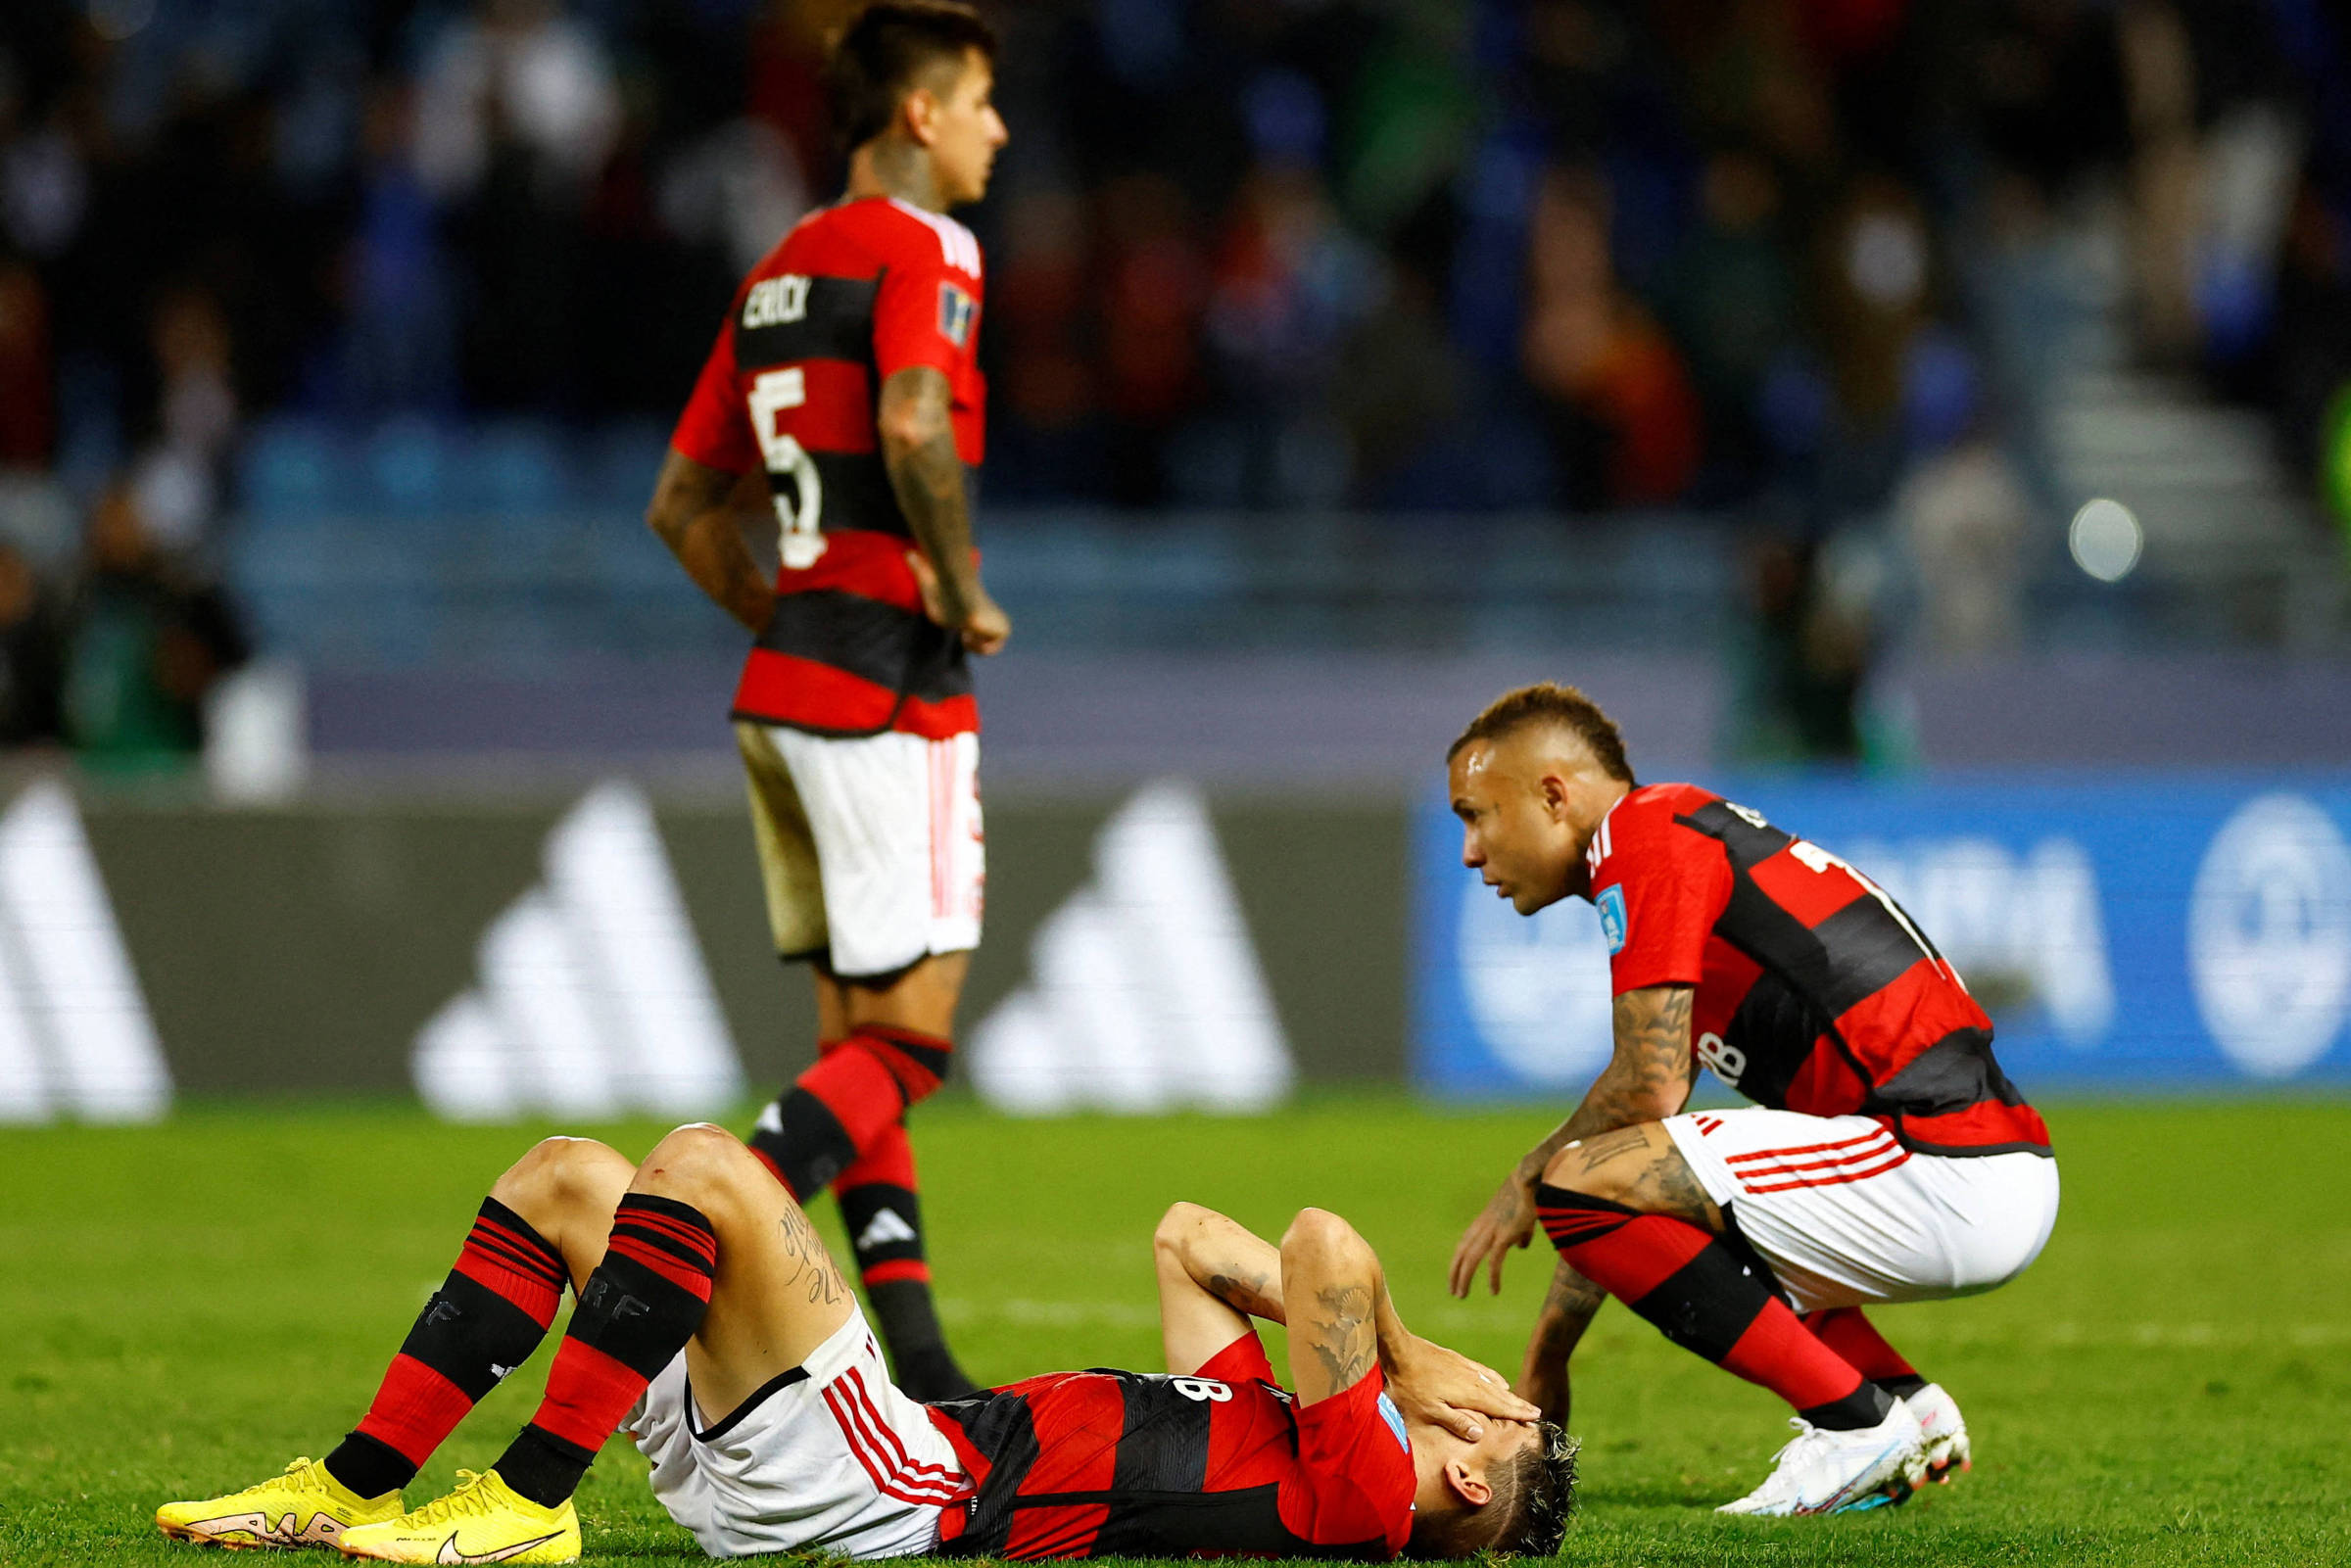 Independiente Del Valle x Flamengo - Expectativas dos colunistas - Coluna  do Fla